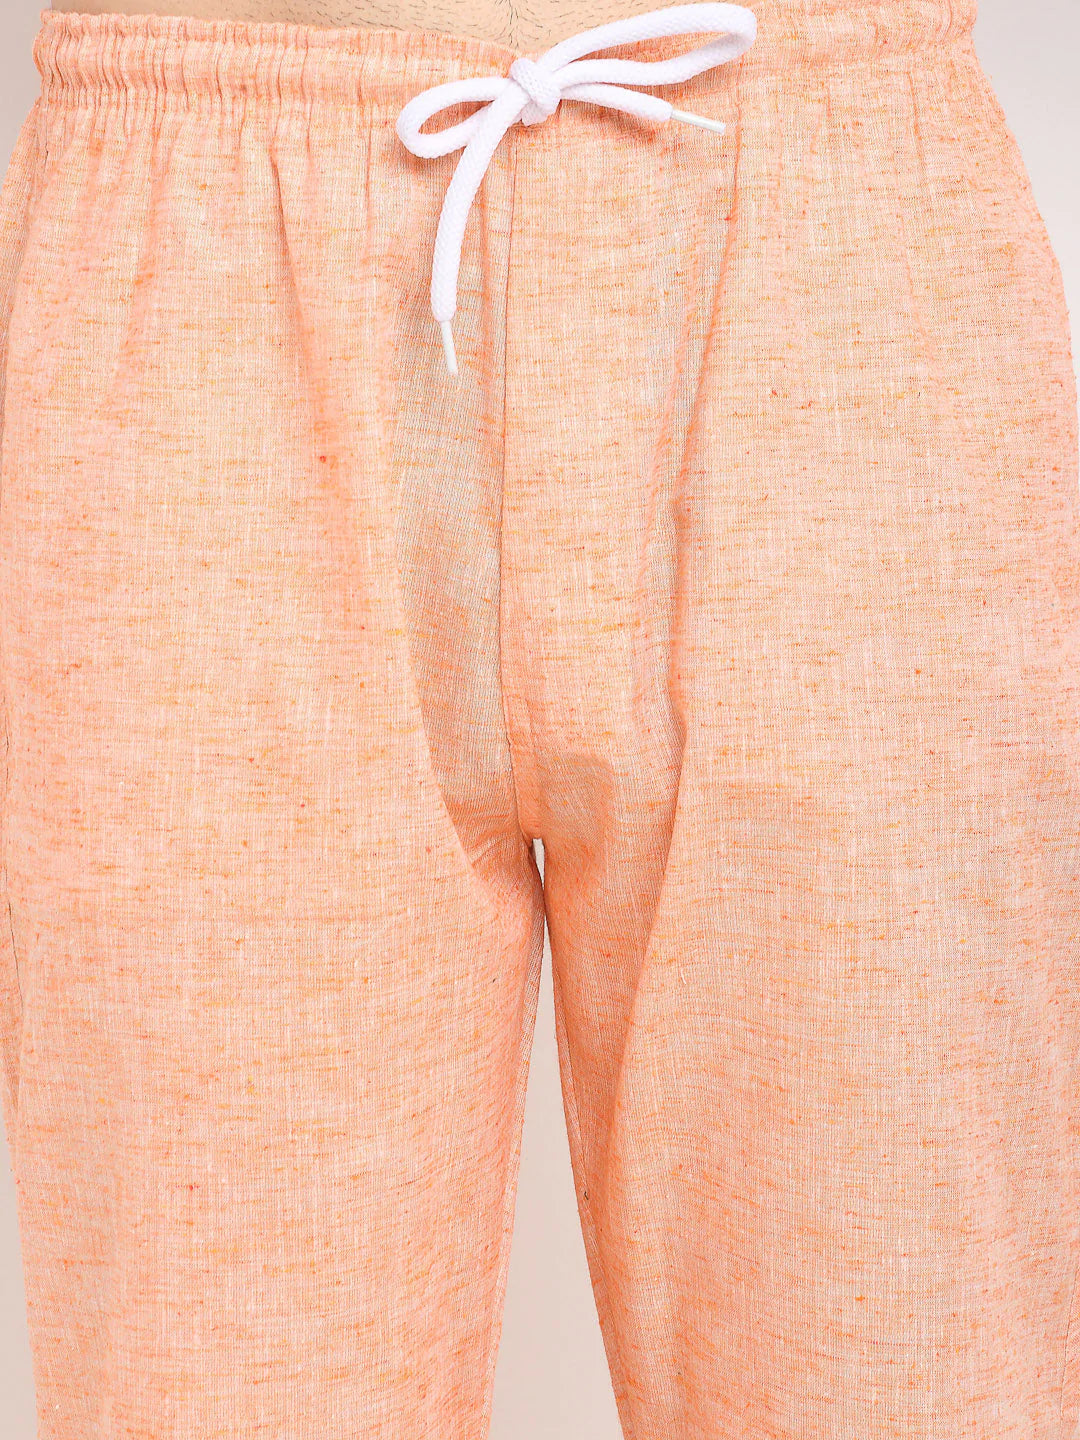 Jainish Men's Orange Linen Cotton Track Pants ( JOG 021Orange )